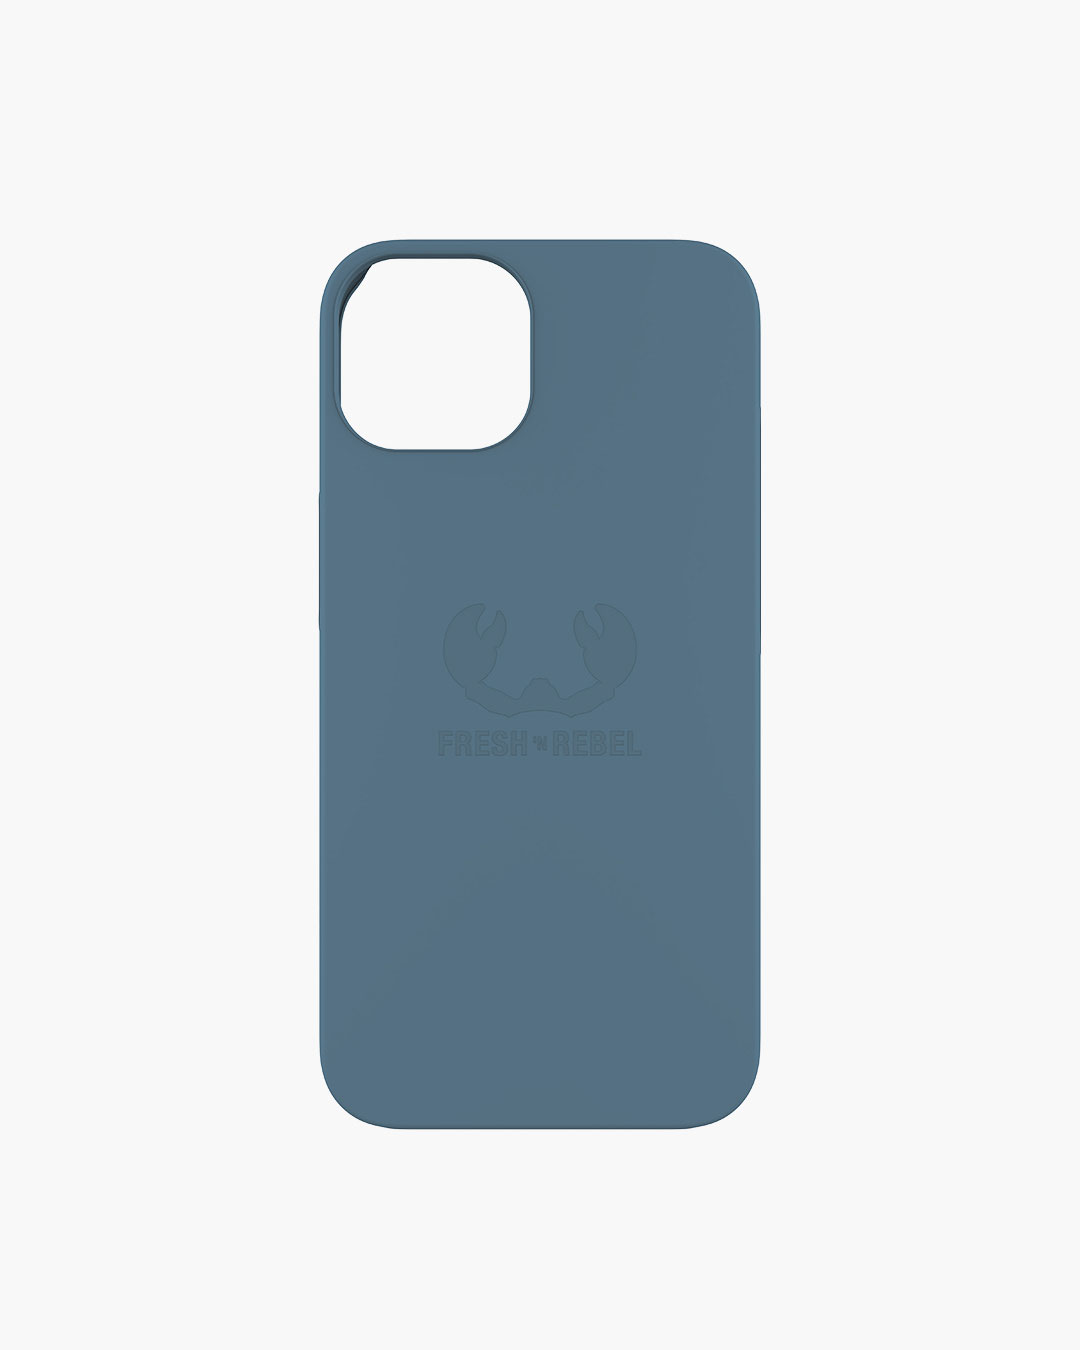 Fresh 'n Rebel - Phone Case iPhone 13 - Dive Blue